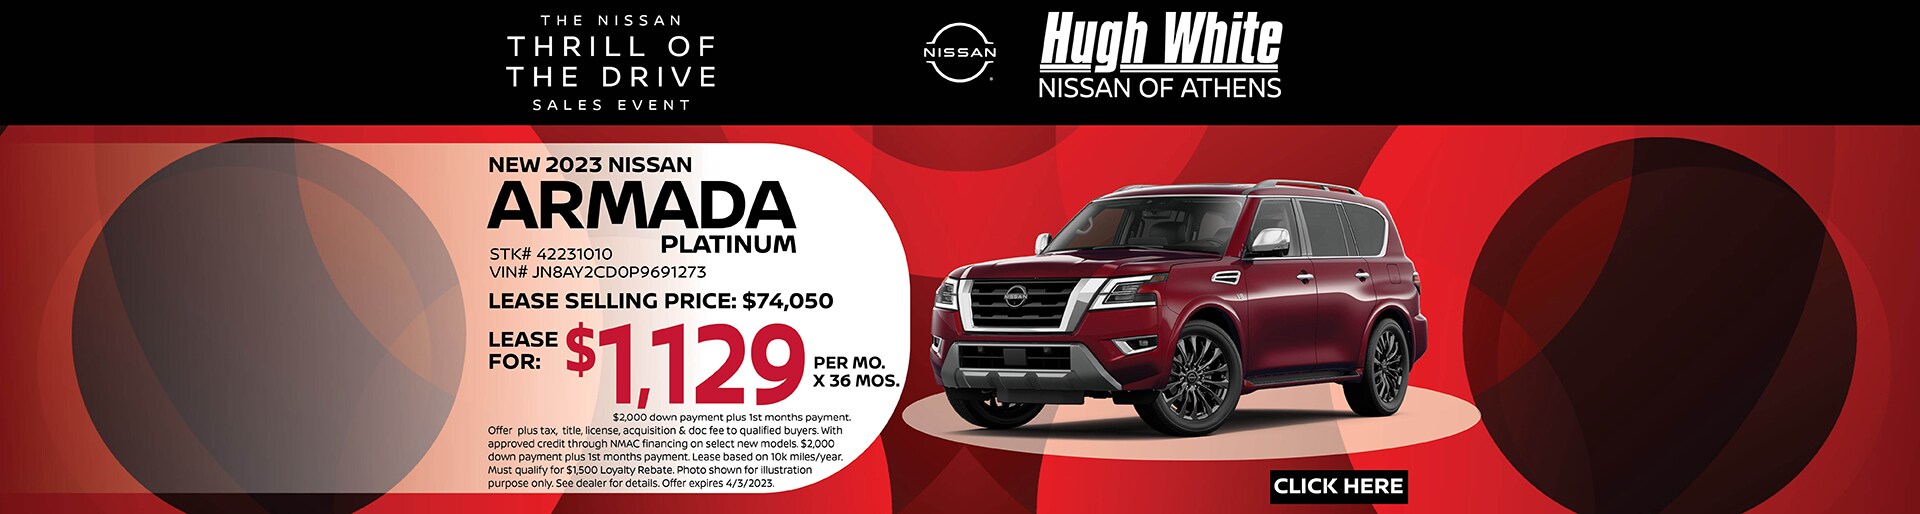 2023 Nissan Armada Lease Offer | Hugh White Nissan Athens